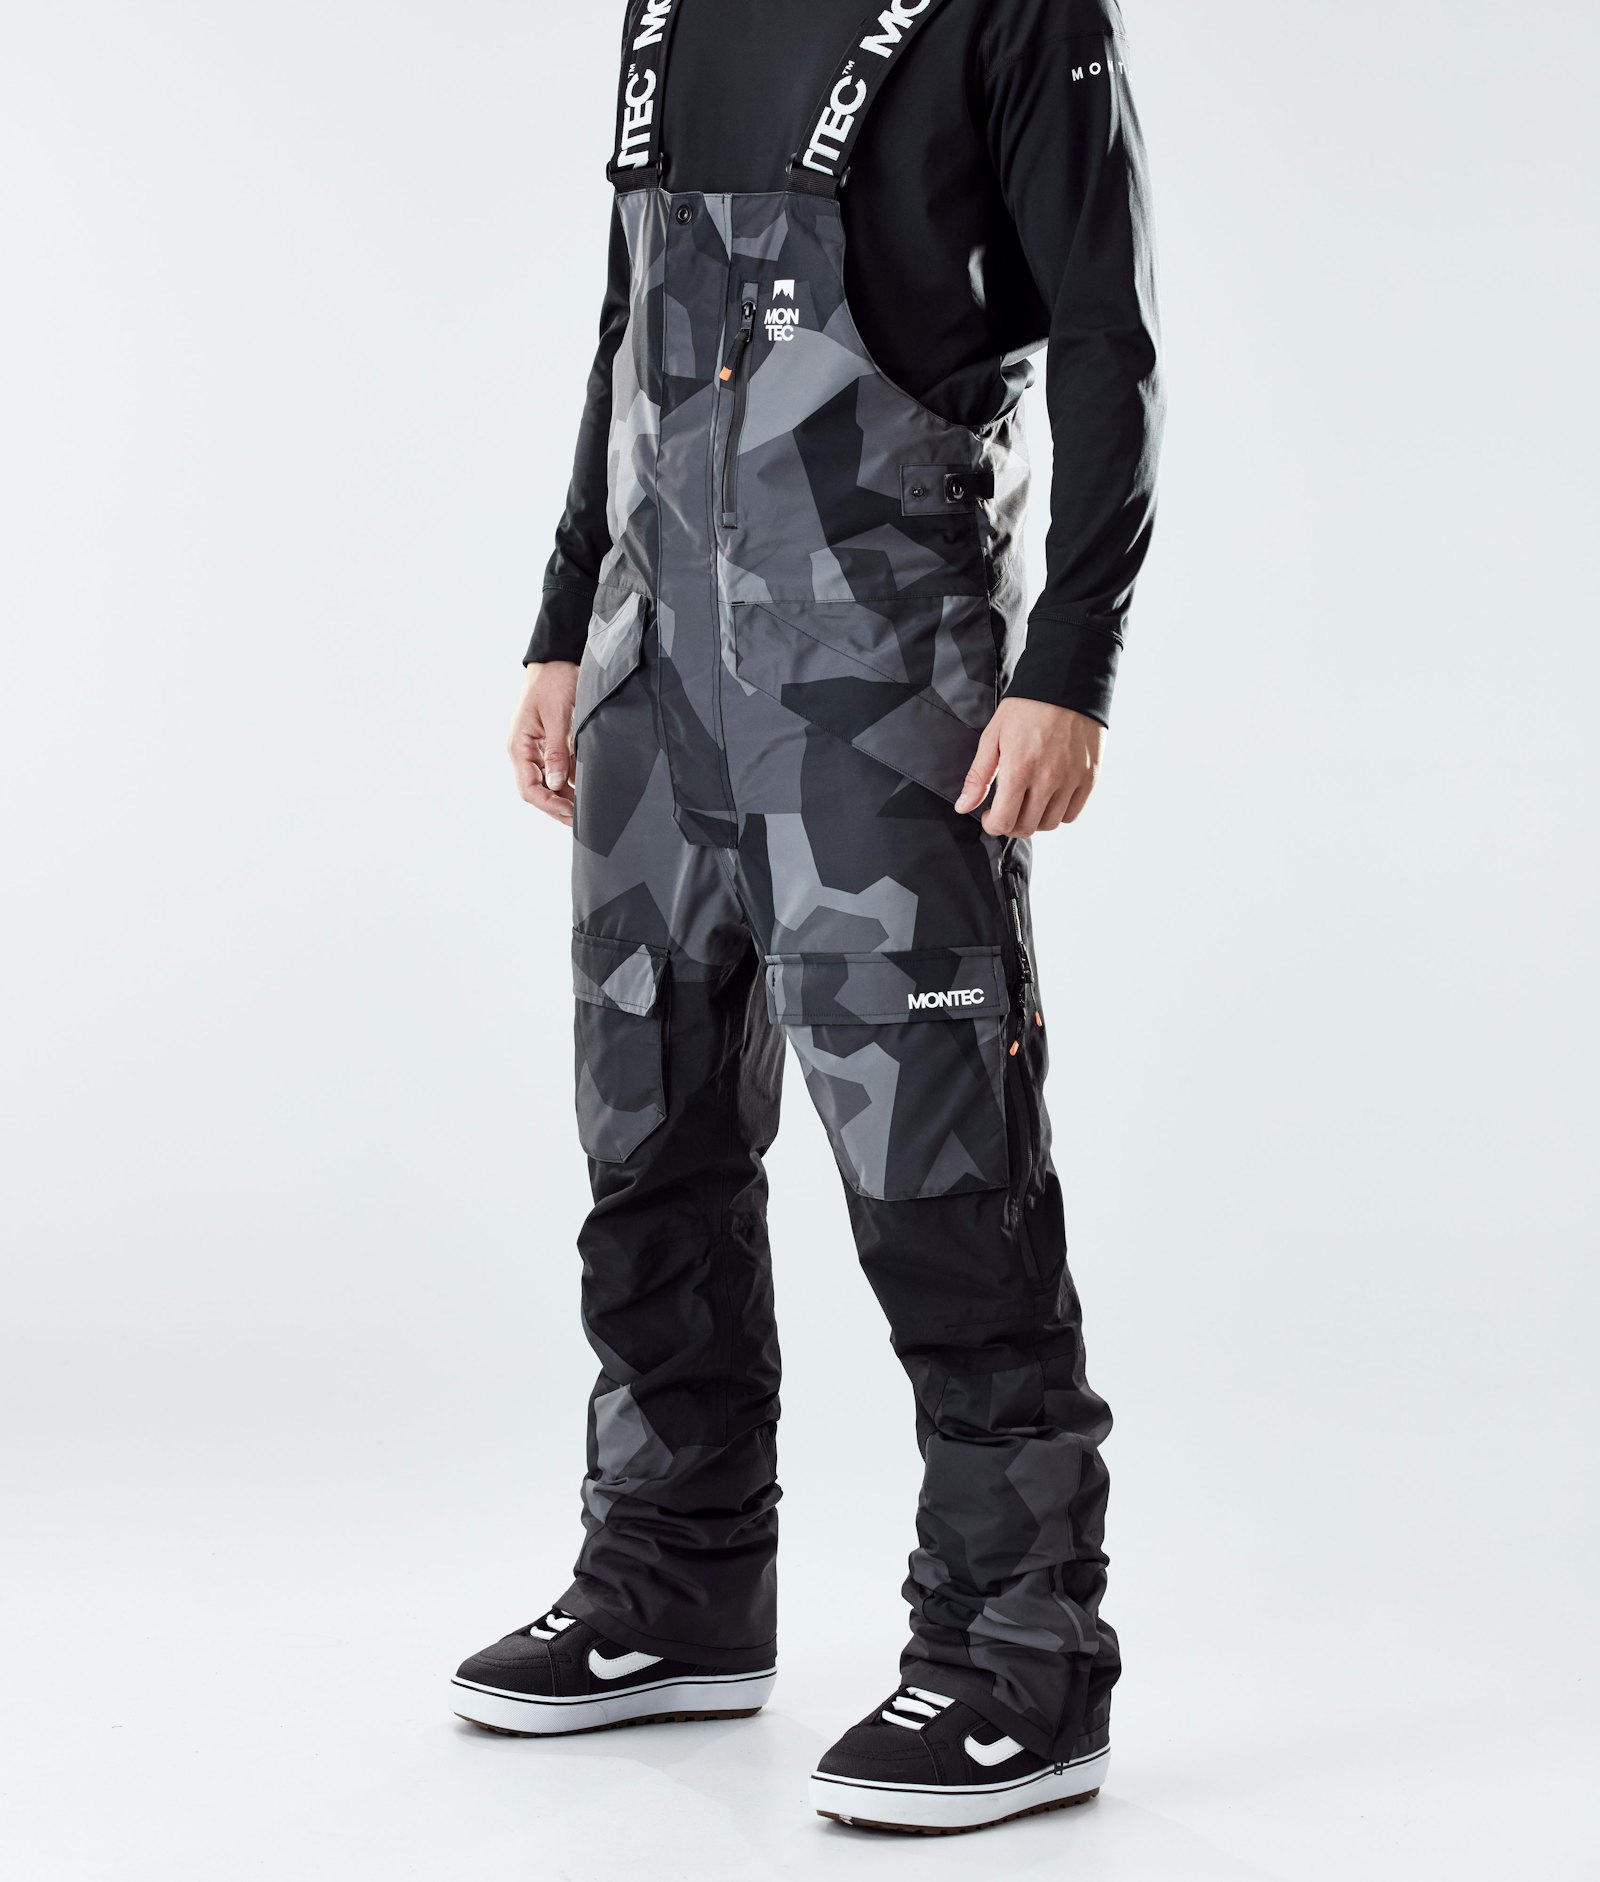 Fawk 2020 Pantalon de Snowboard Homme Night Camo/Black